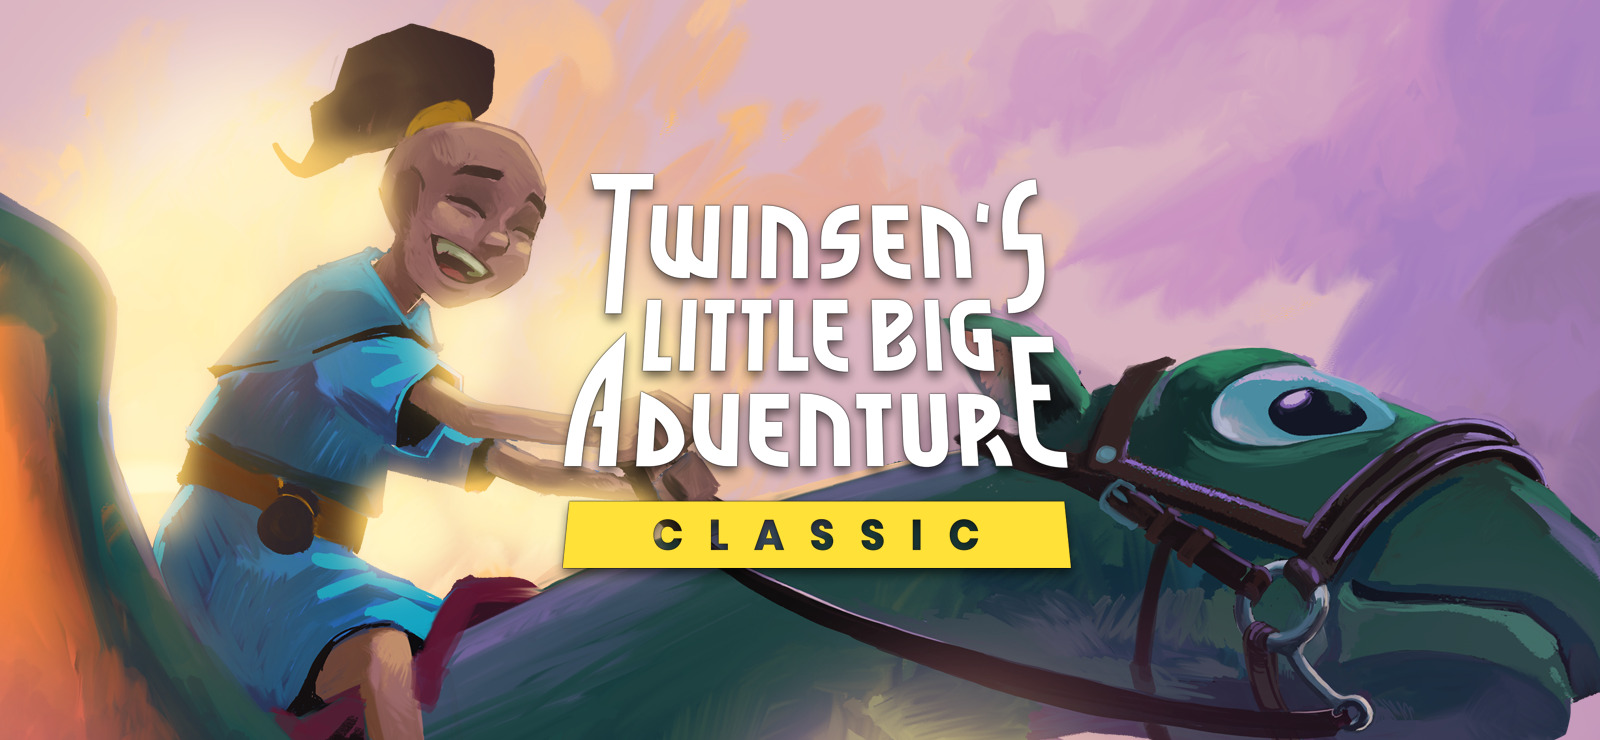 download twinsens little big adventure classic